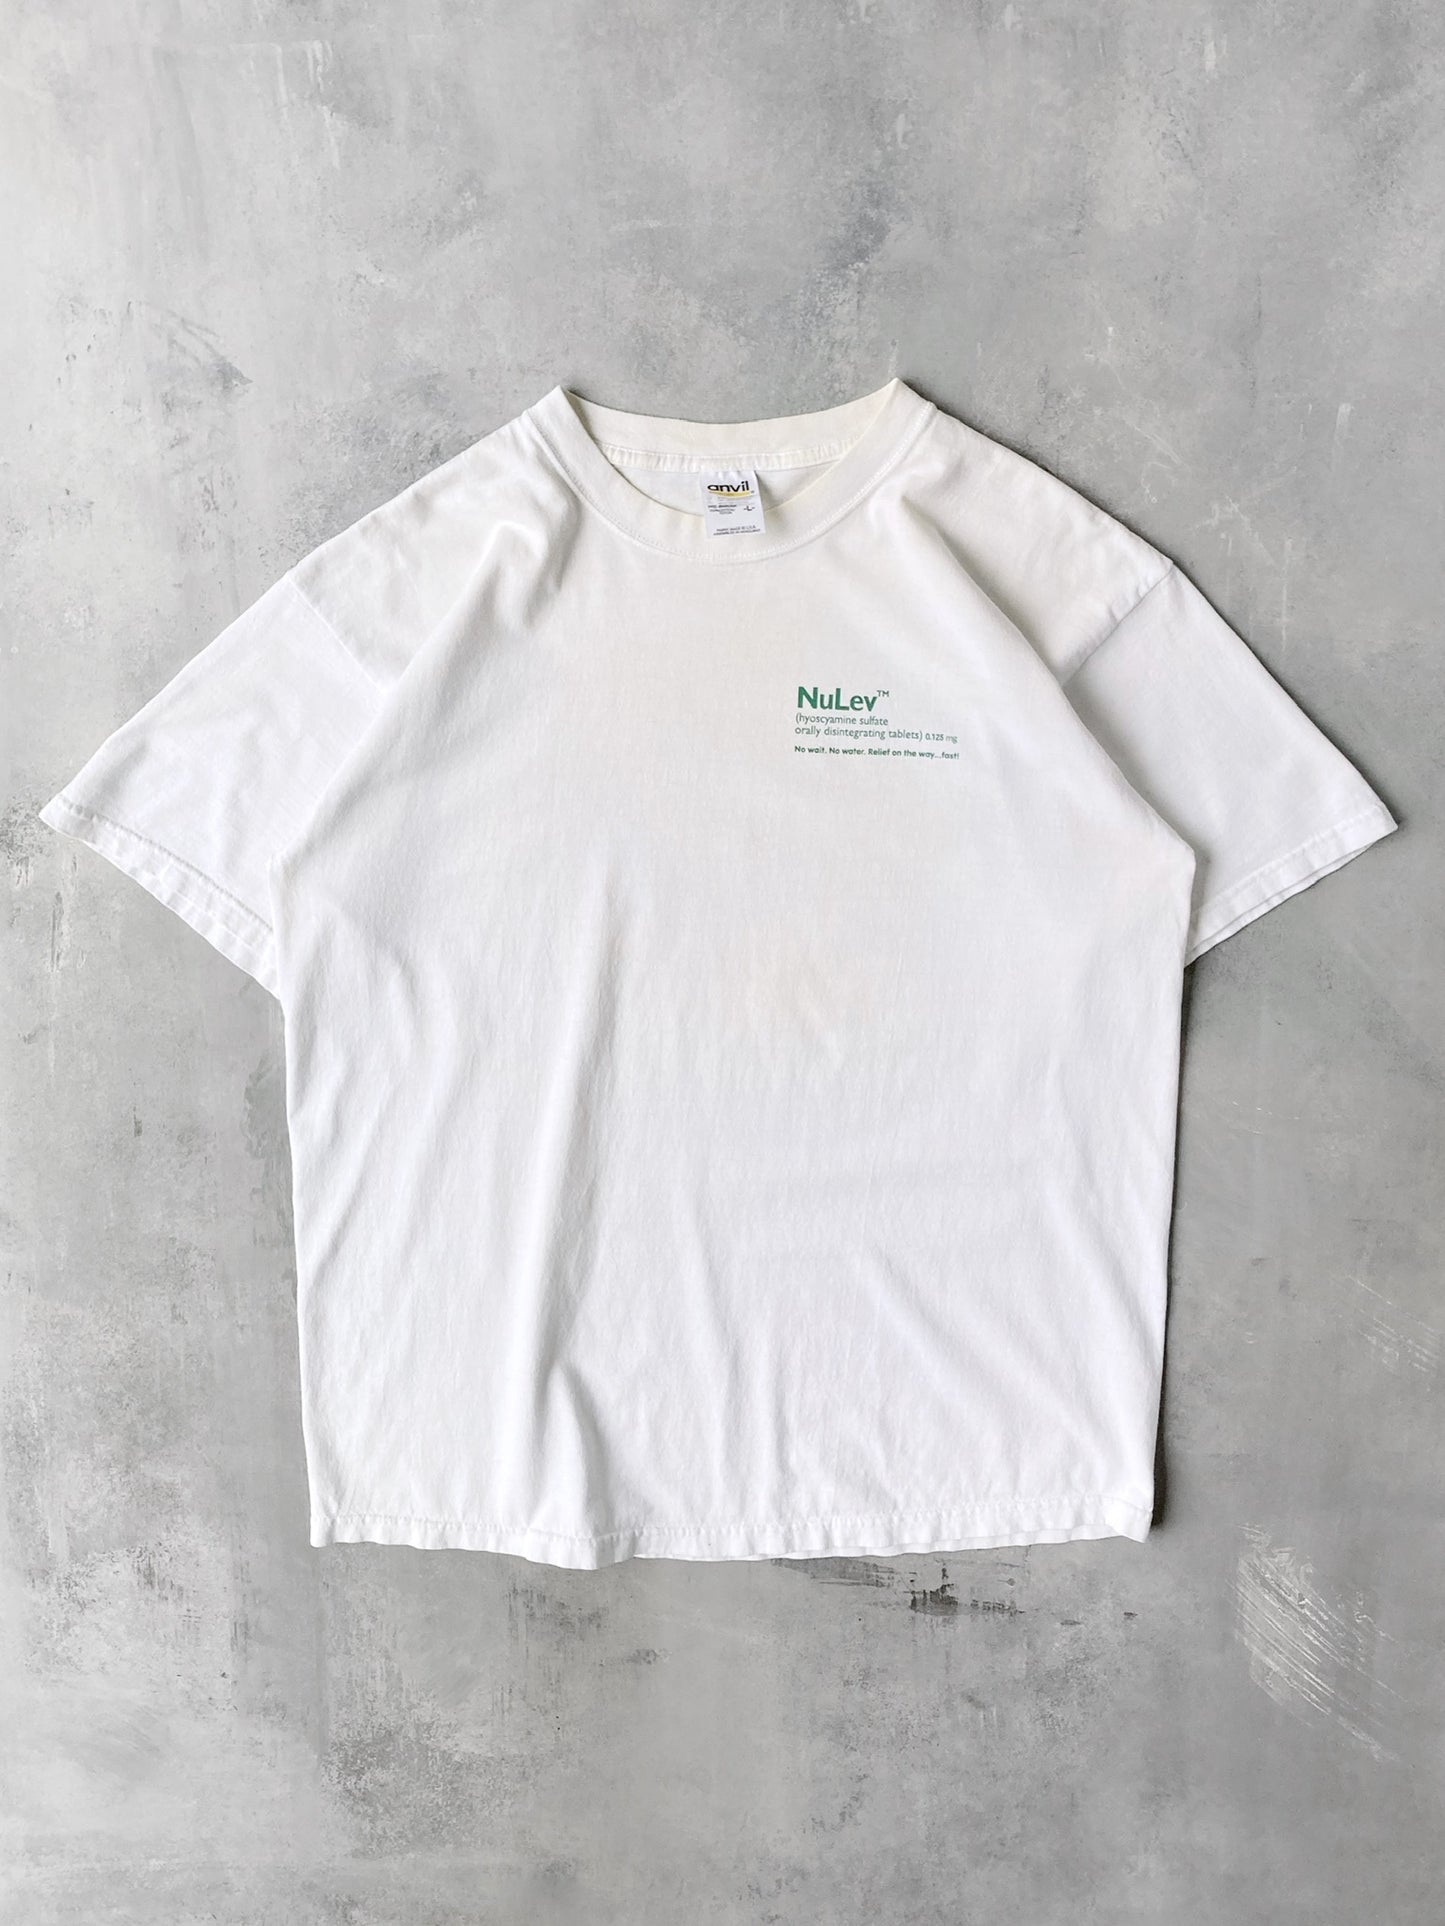 NuLev Medication T-Shirt 00's - Large/ XL